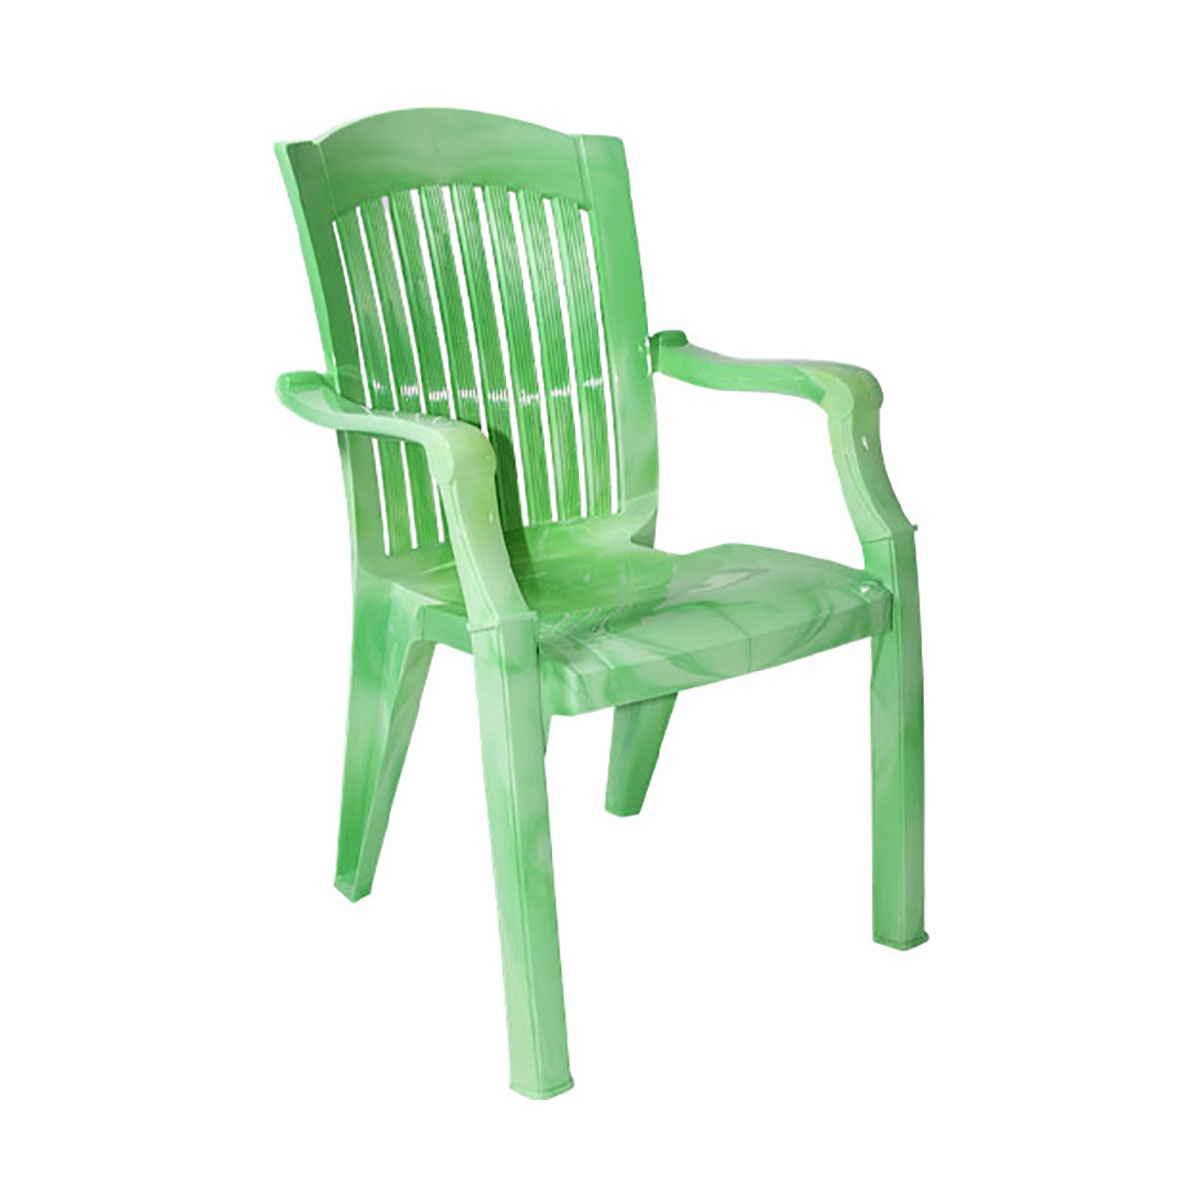 фото Кресло пластиковое стандарт пластик премиум-1 лессир 90 x 45 x 56 cм весенне-зеленое